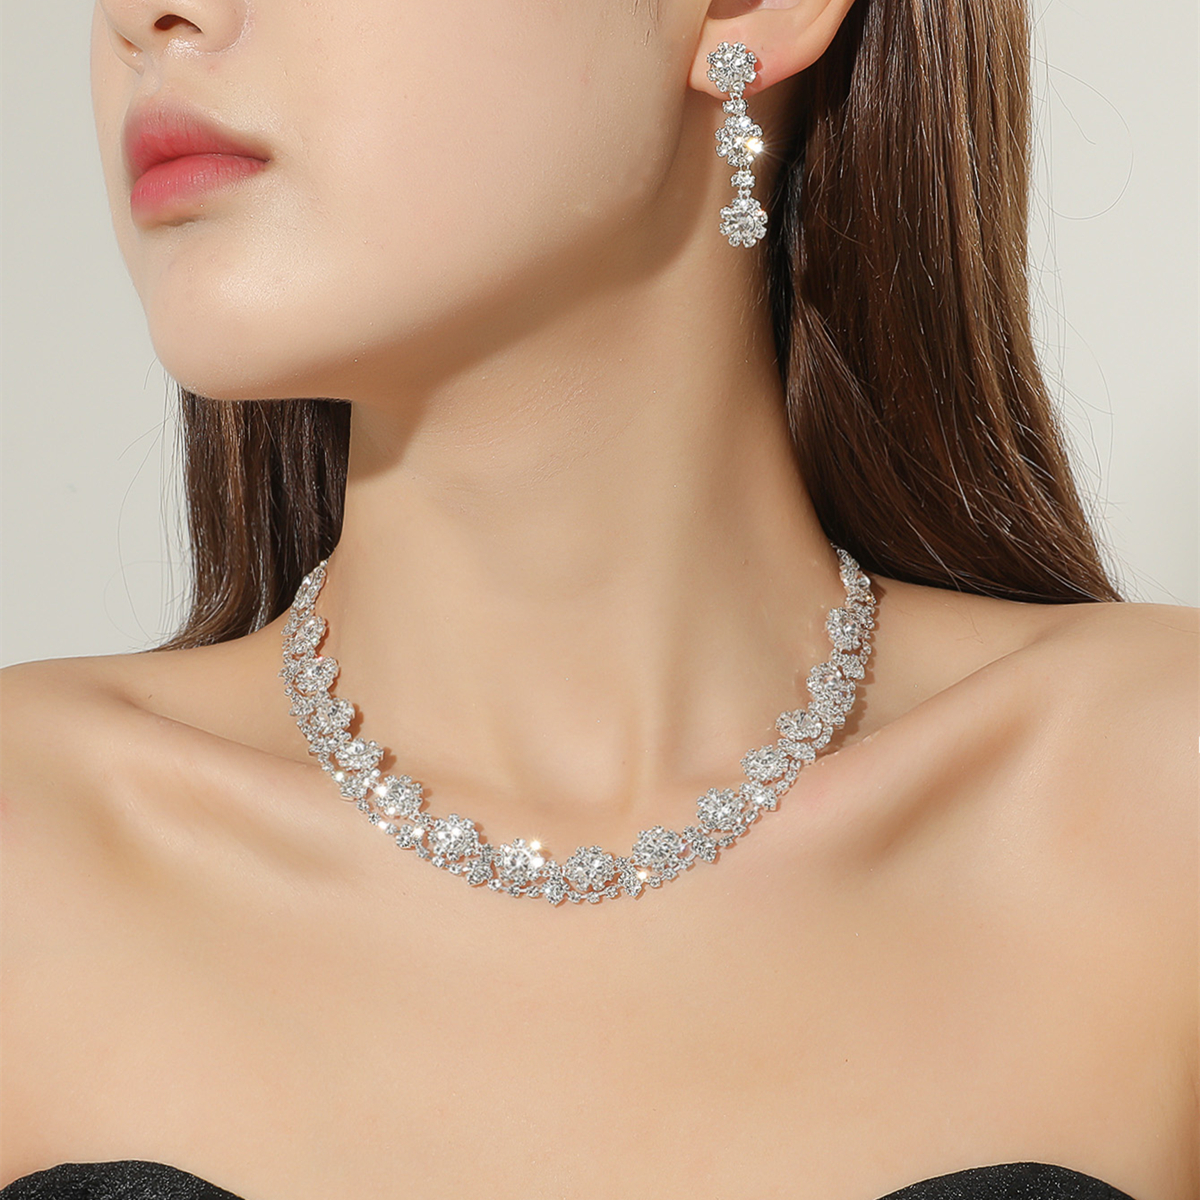 Bridal necklace wedding accessories - Item # 18499